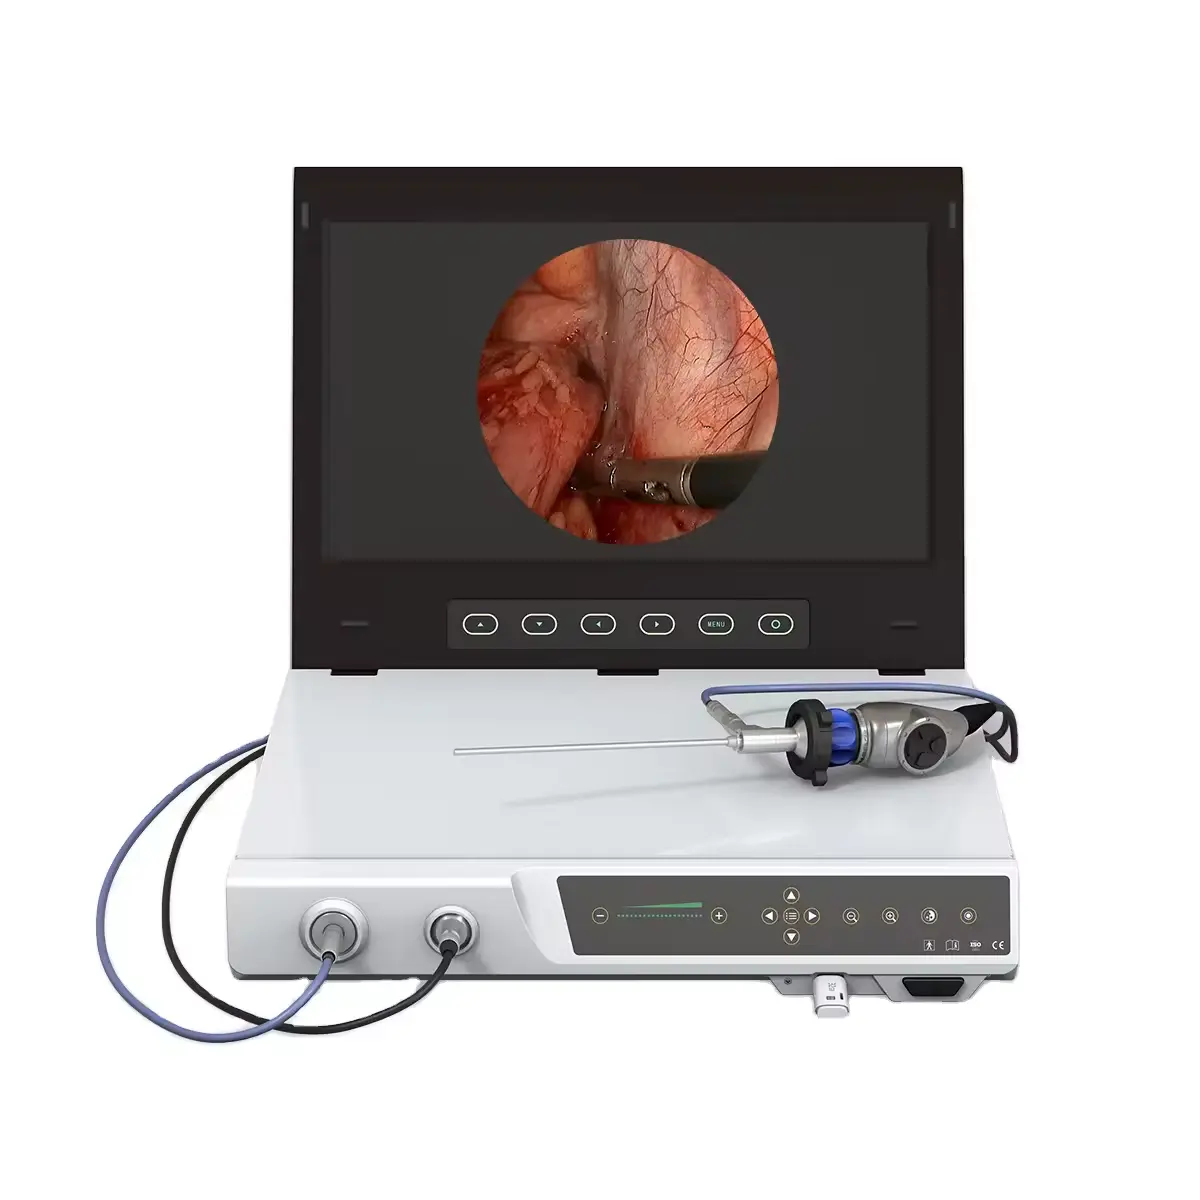 Full HD portable endoscope camera system